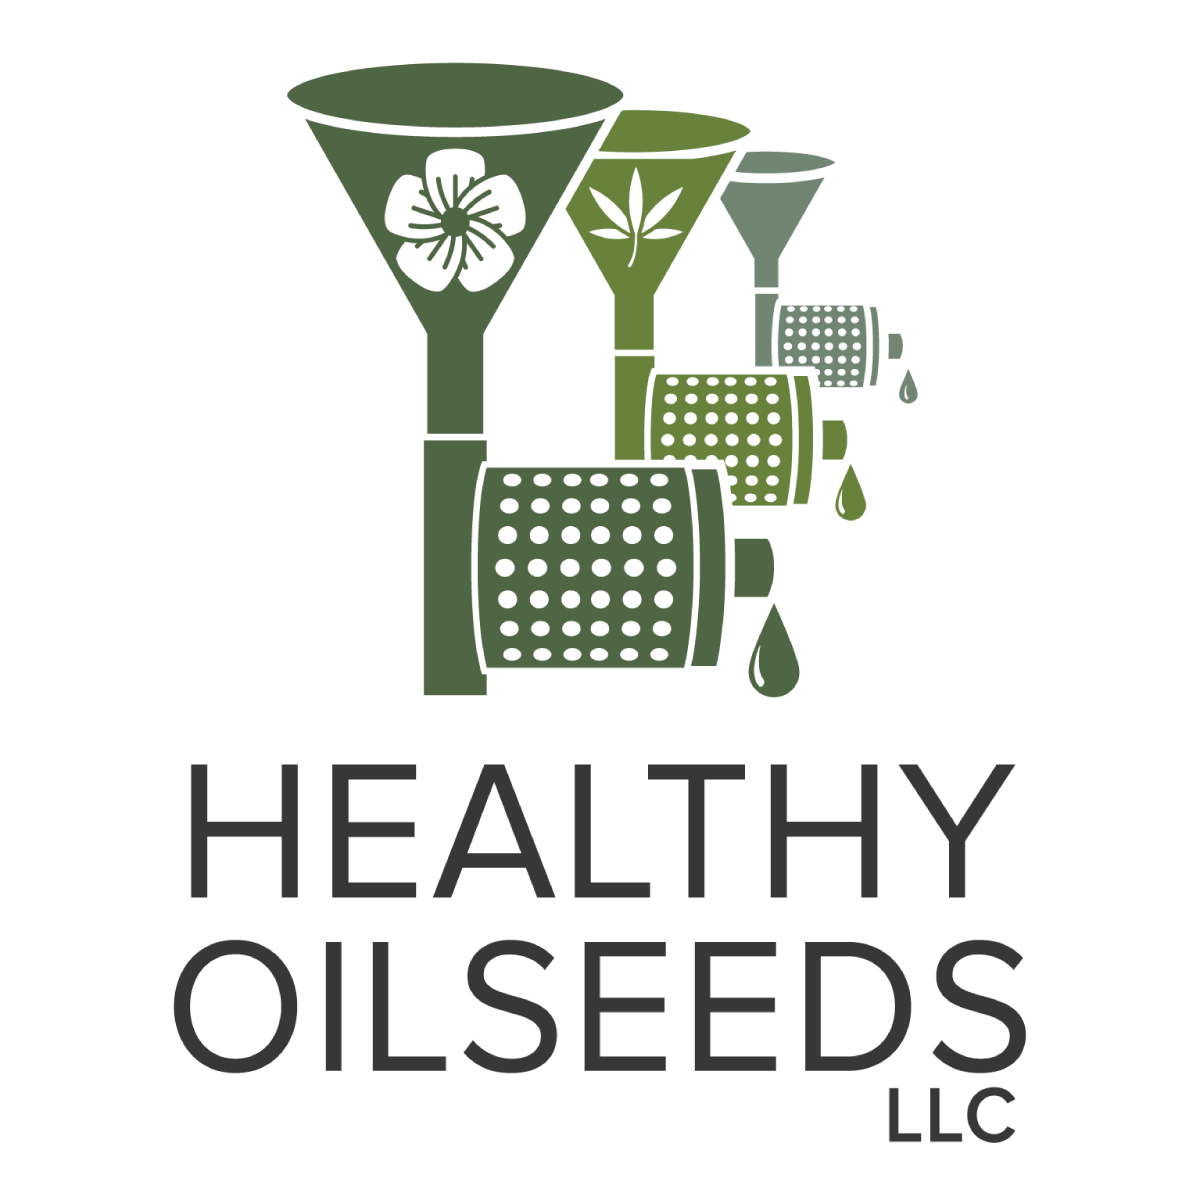 Healthy Oilseed